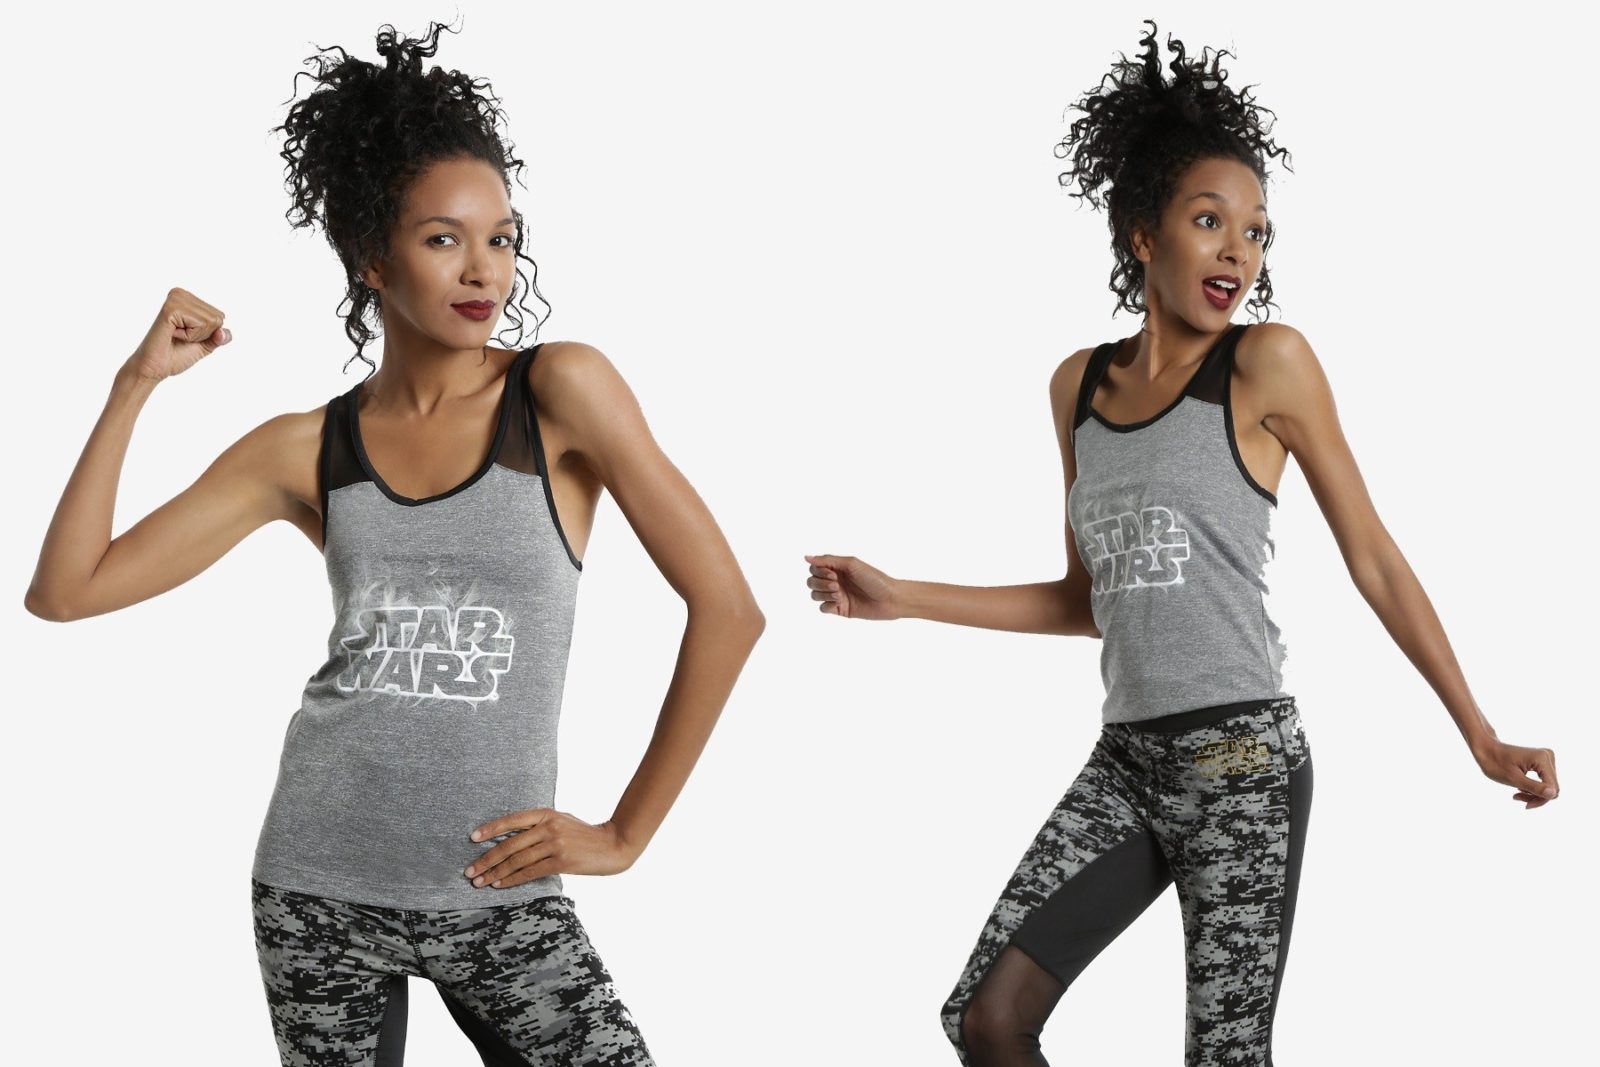 Women’s Star Wars workout apparel